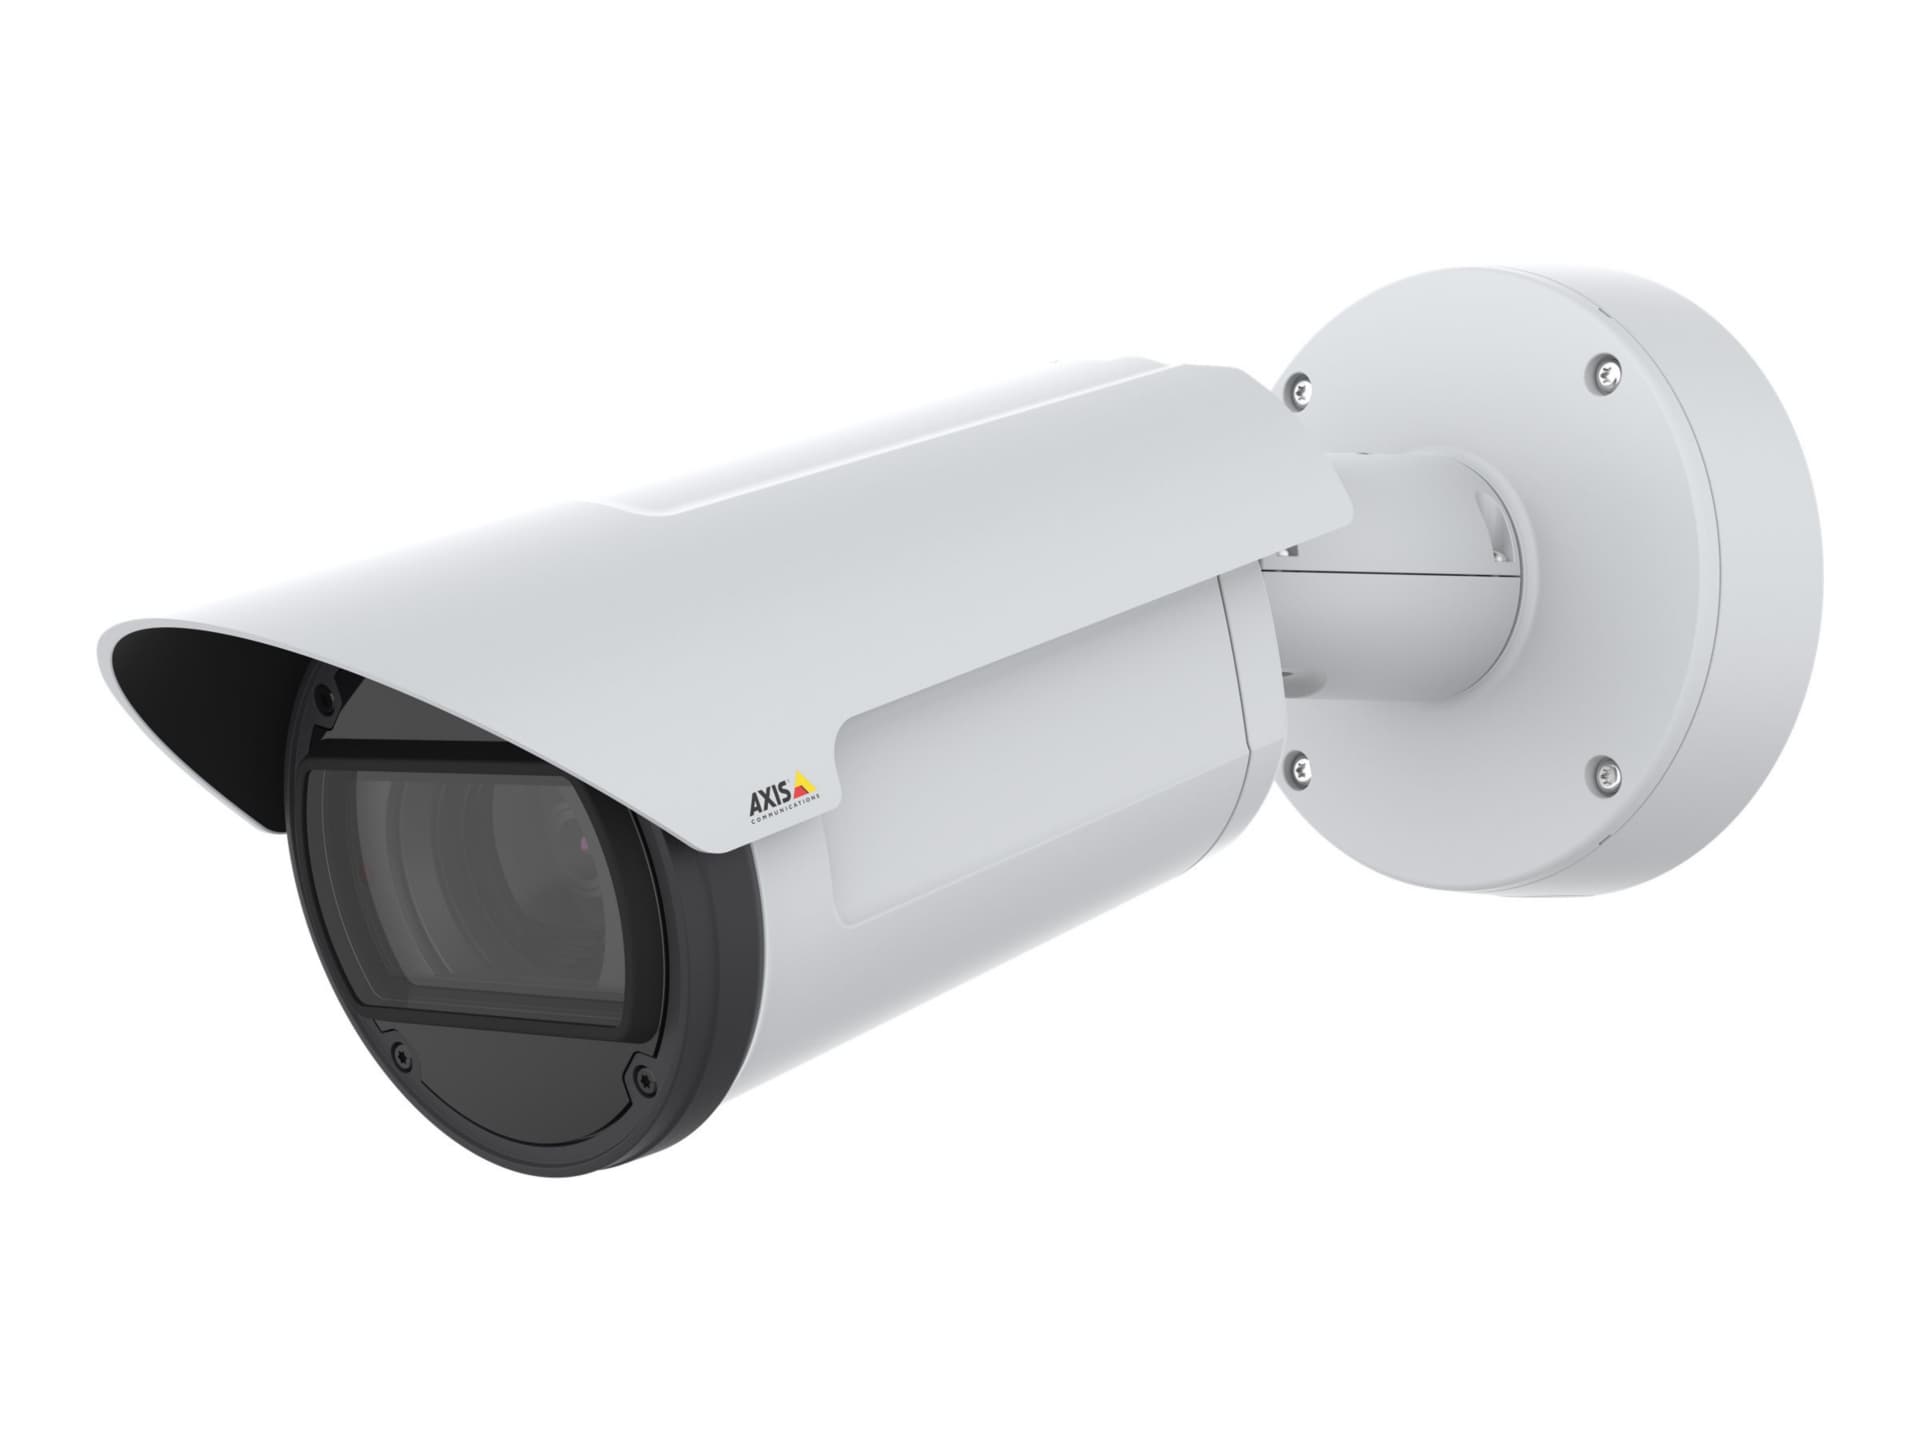 AXIS Q1786-LE - network surveillance camera - 01162-001 - Security